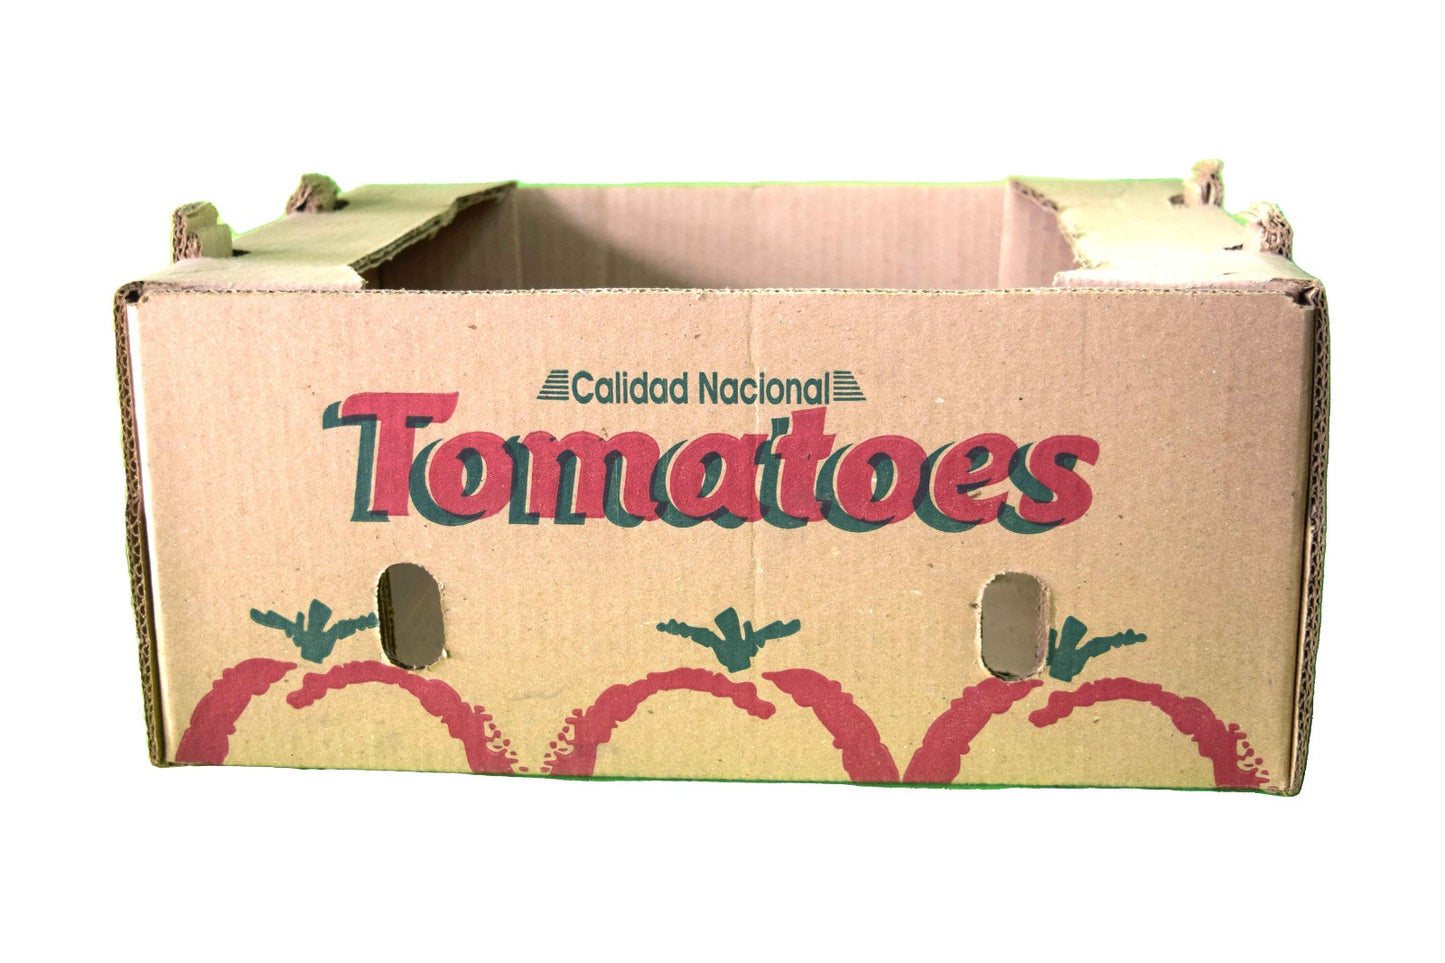 Tomatoes carton 2